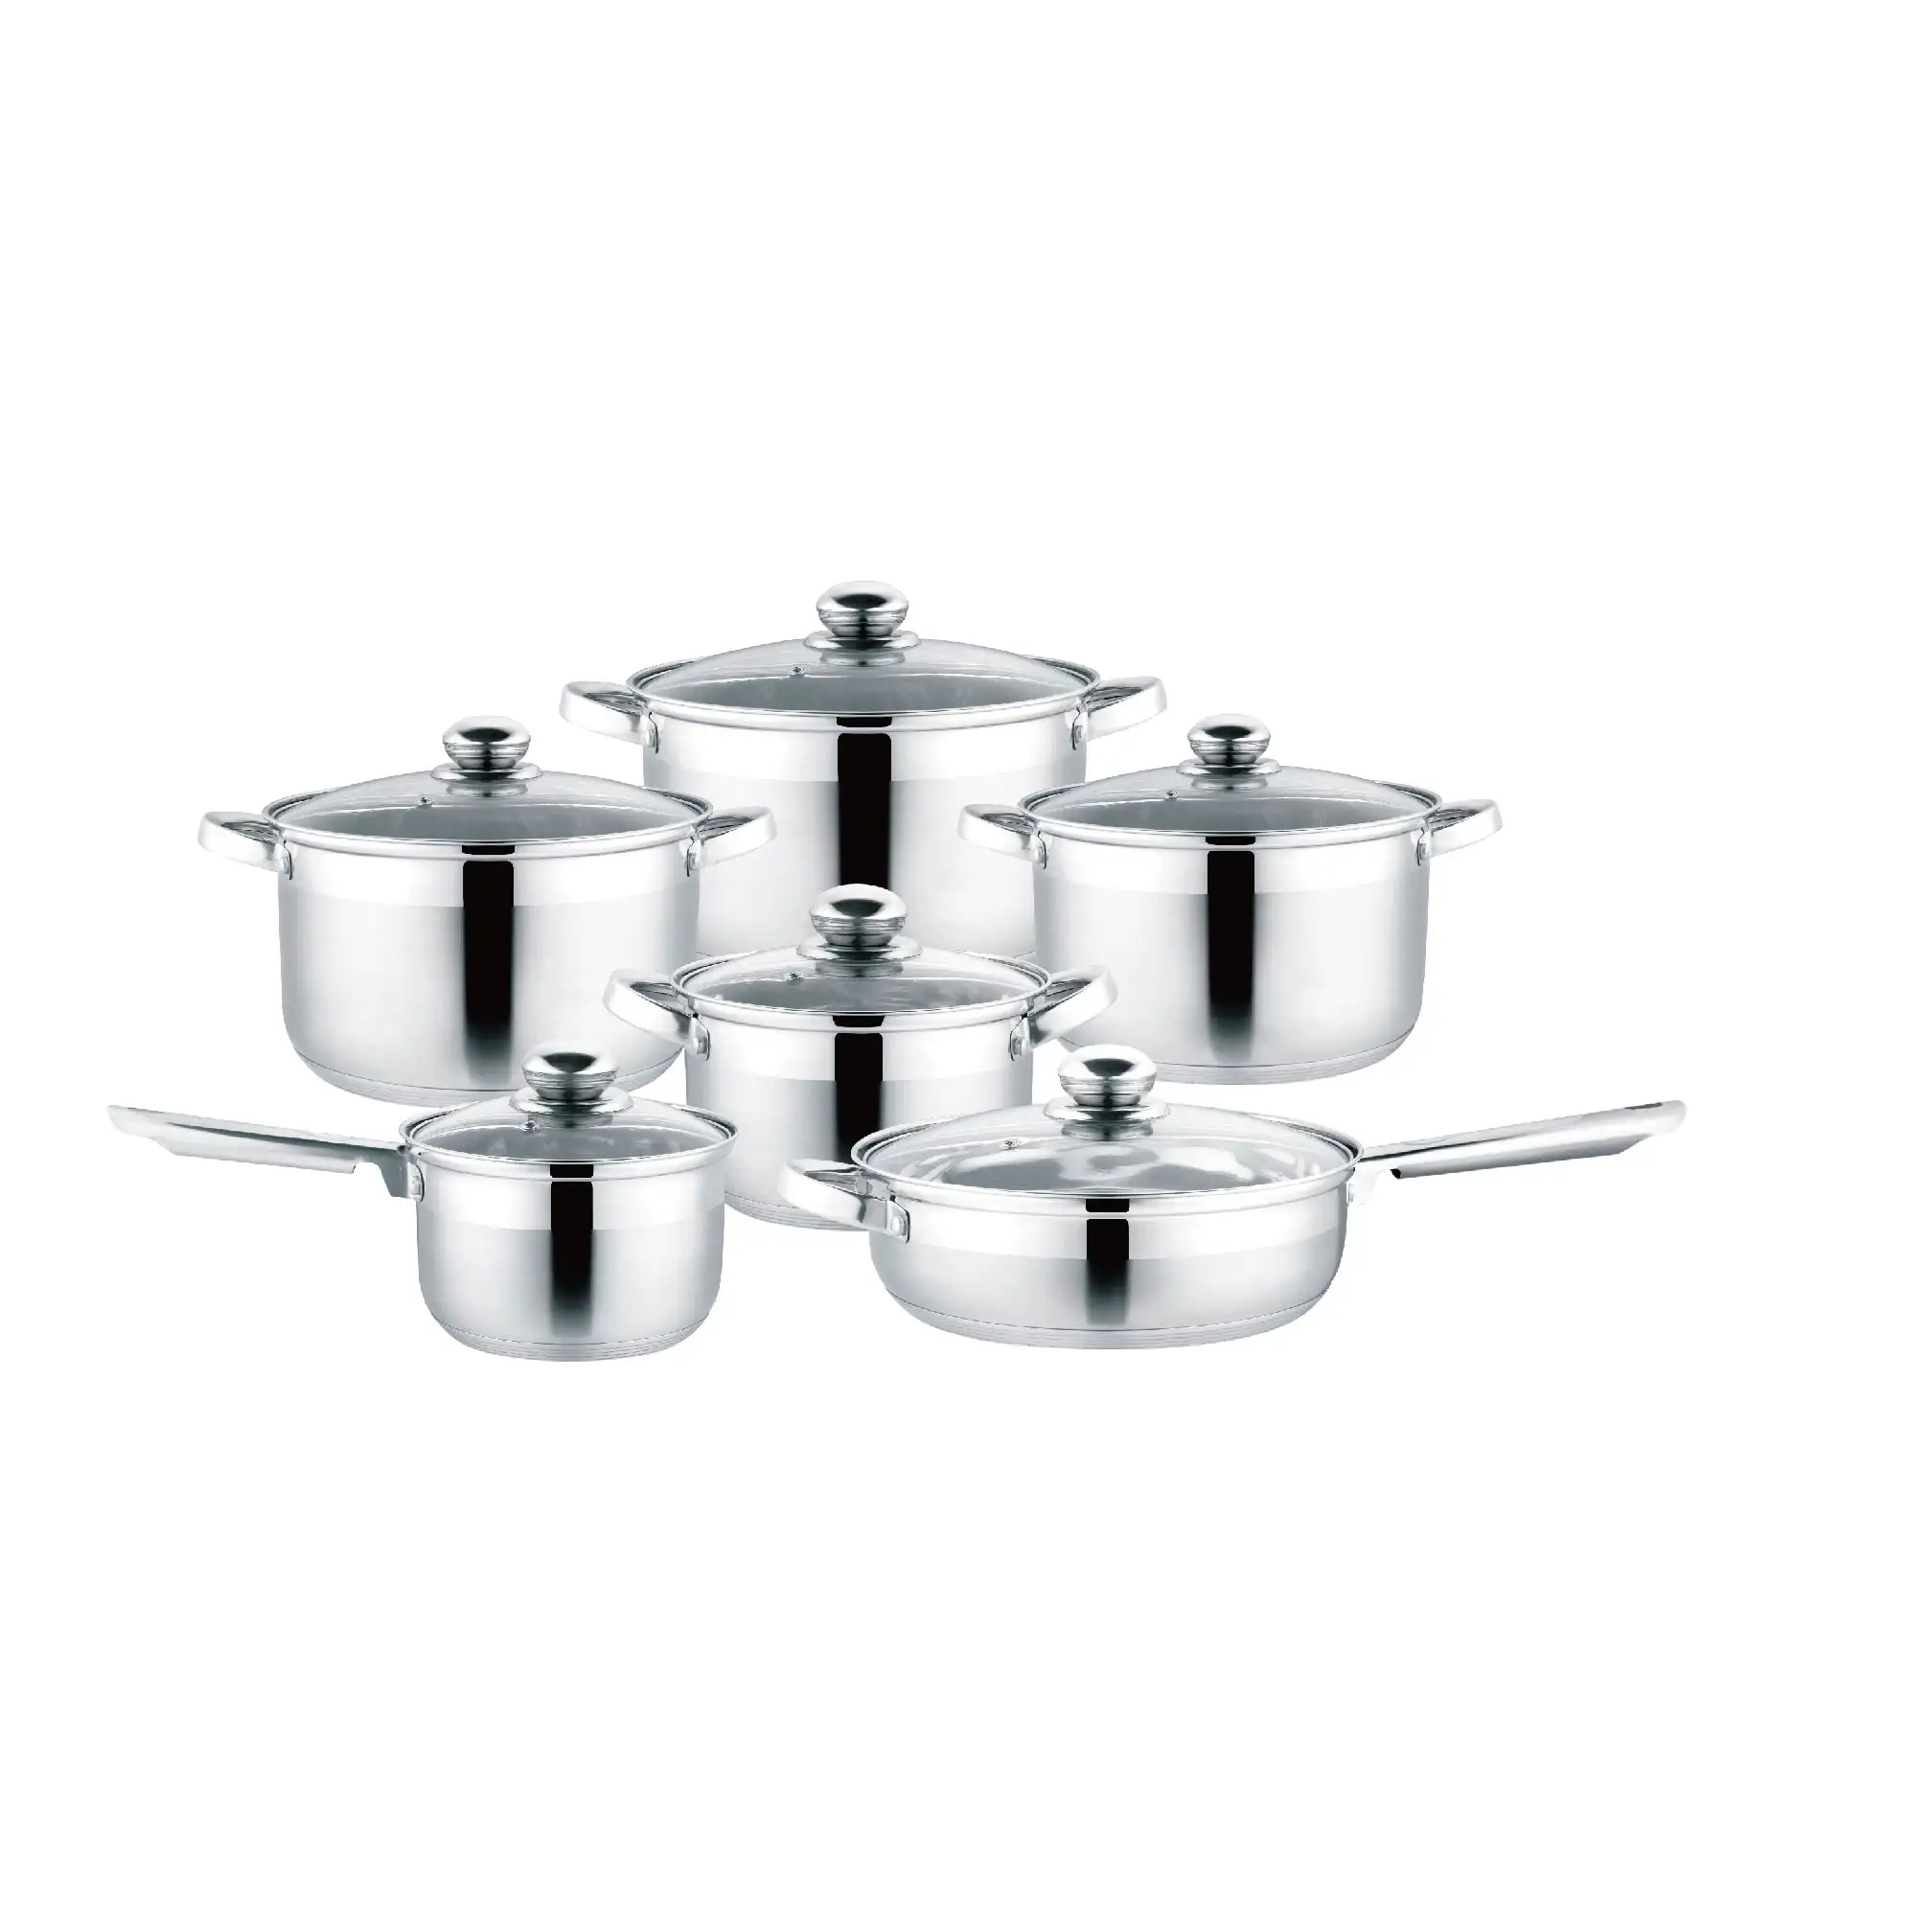 New Stretched Pot Non Stick Cookware Set Pot Custom 6 Pieces Best Stainless steel Cookware Pans Pots Set